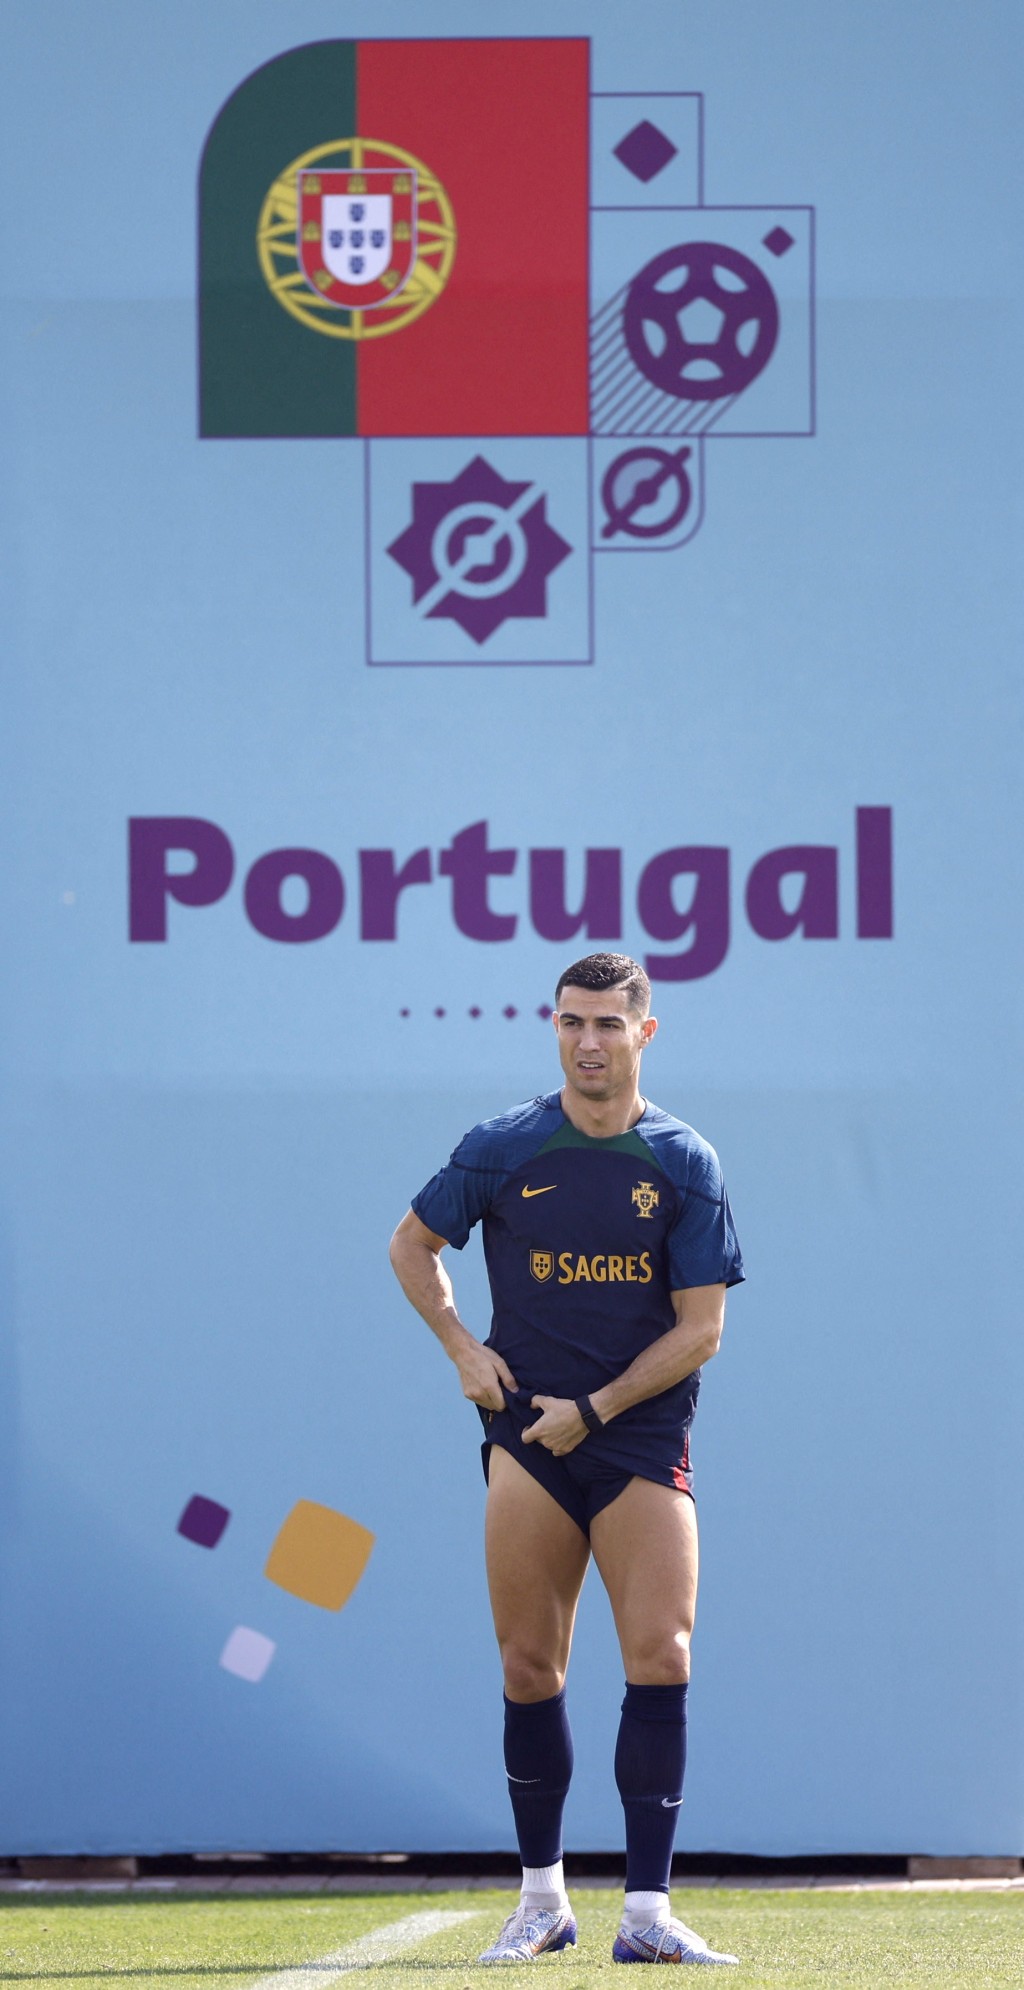 C朗在Instagram一再强调目前首要任务是协助葡萄牙争取佳绩。Reuters